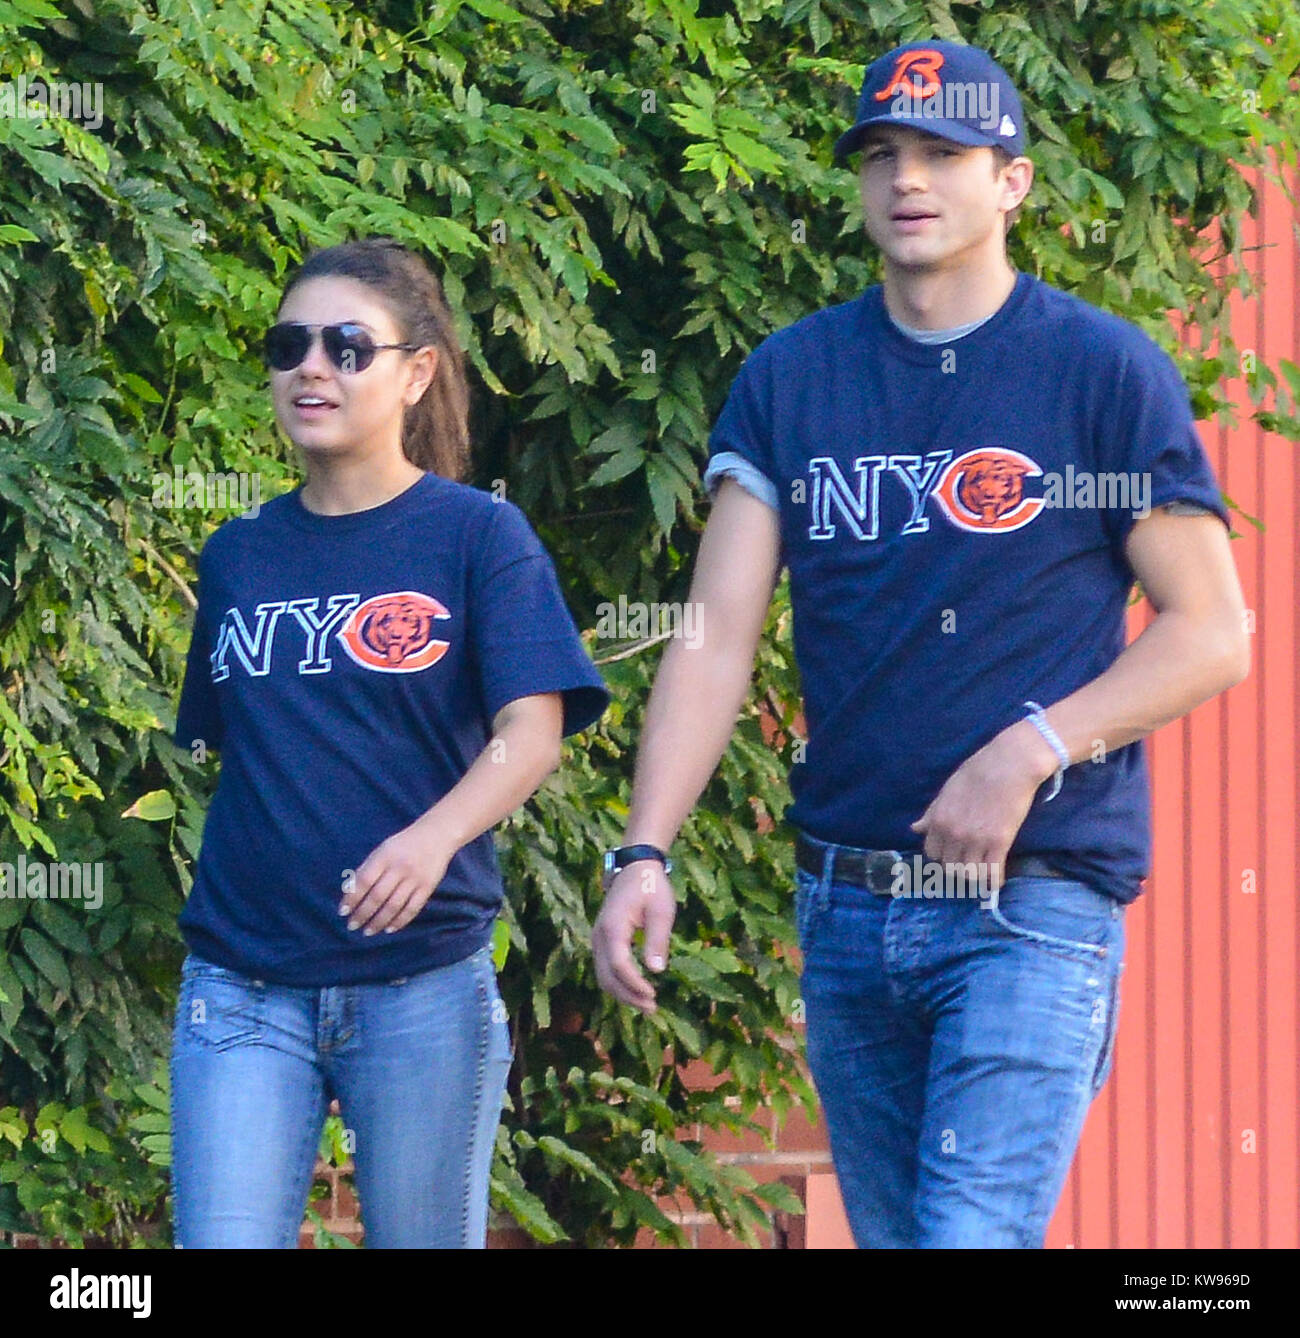 NEW YORK, NY - SEPTEMBER 23: Mila Kunis and Ashton Kutcher wear matching Chicago Bears NYC shirts on September 23, 2012 in New York City  People:  Mila Kunis Ashton Kutcher Stock Photo